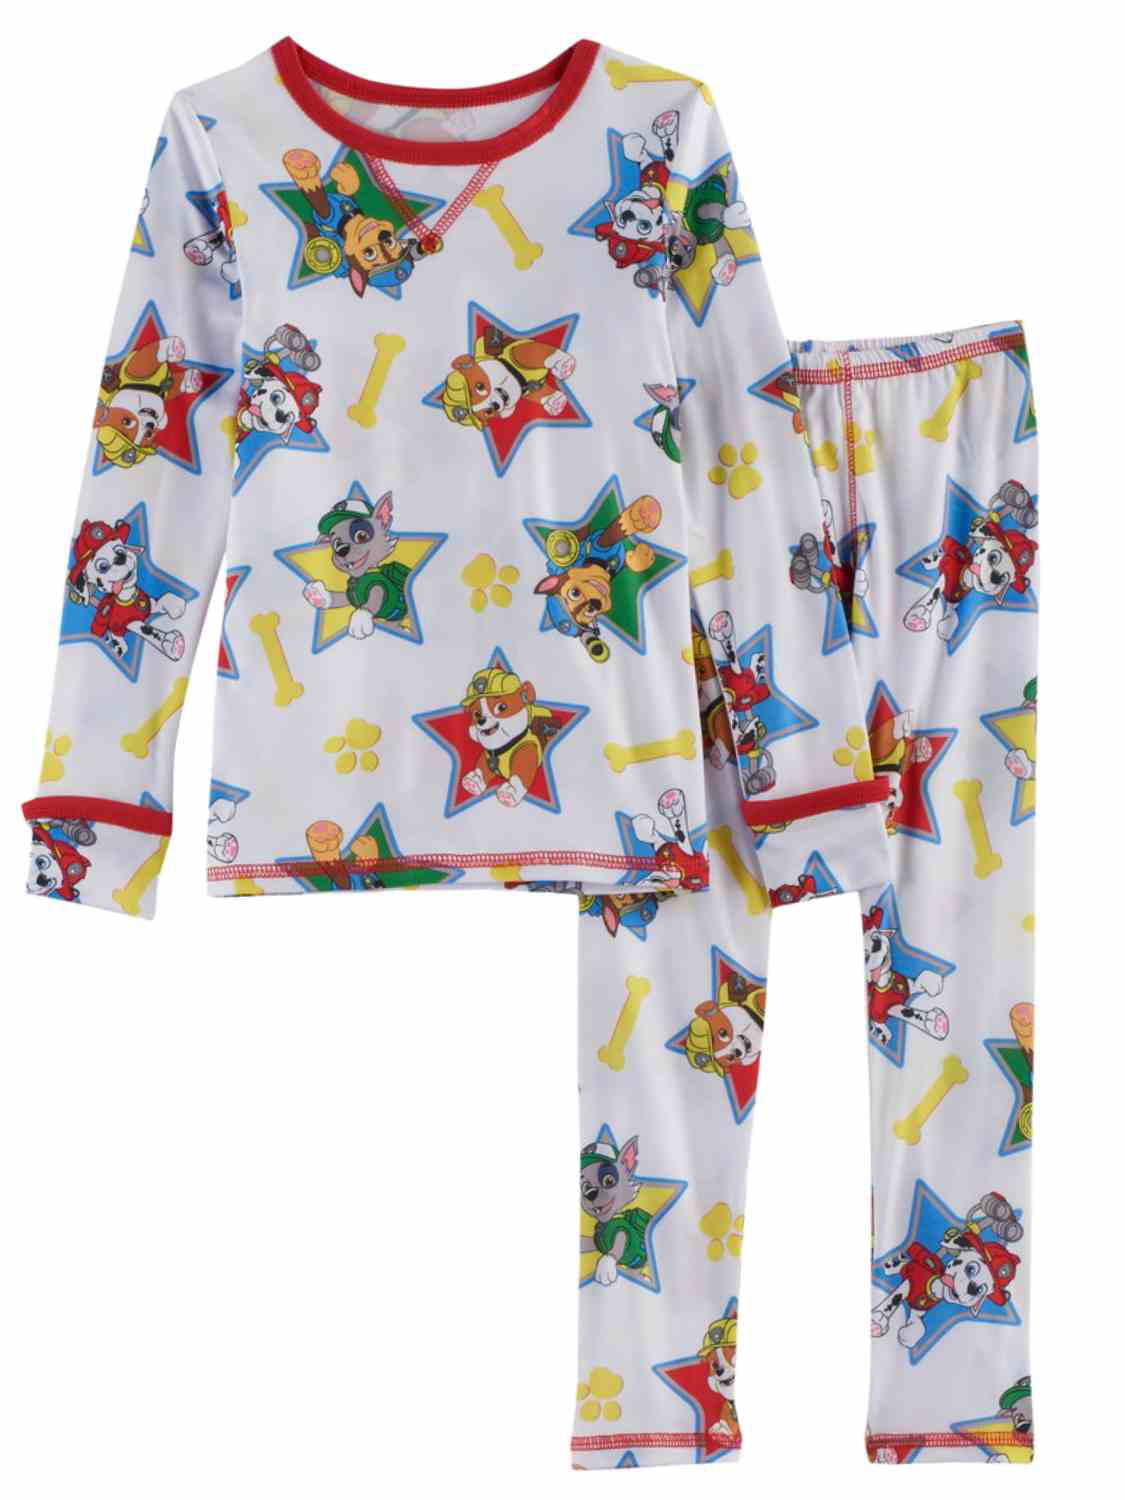 Cuddl Duds Toddler Boys Spiderman Thermal Underwear Long John Base Layer 2-3T 